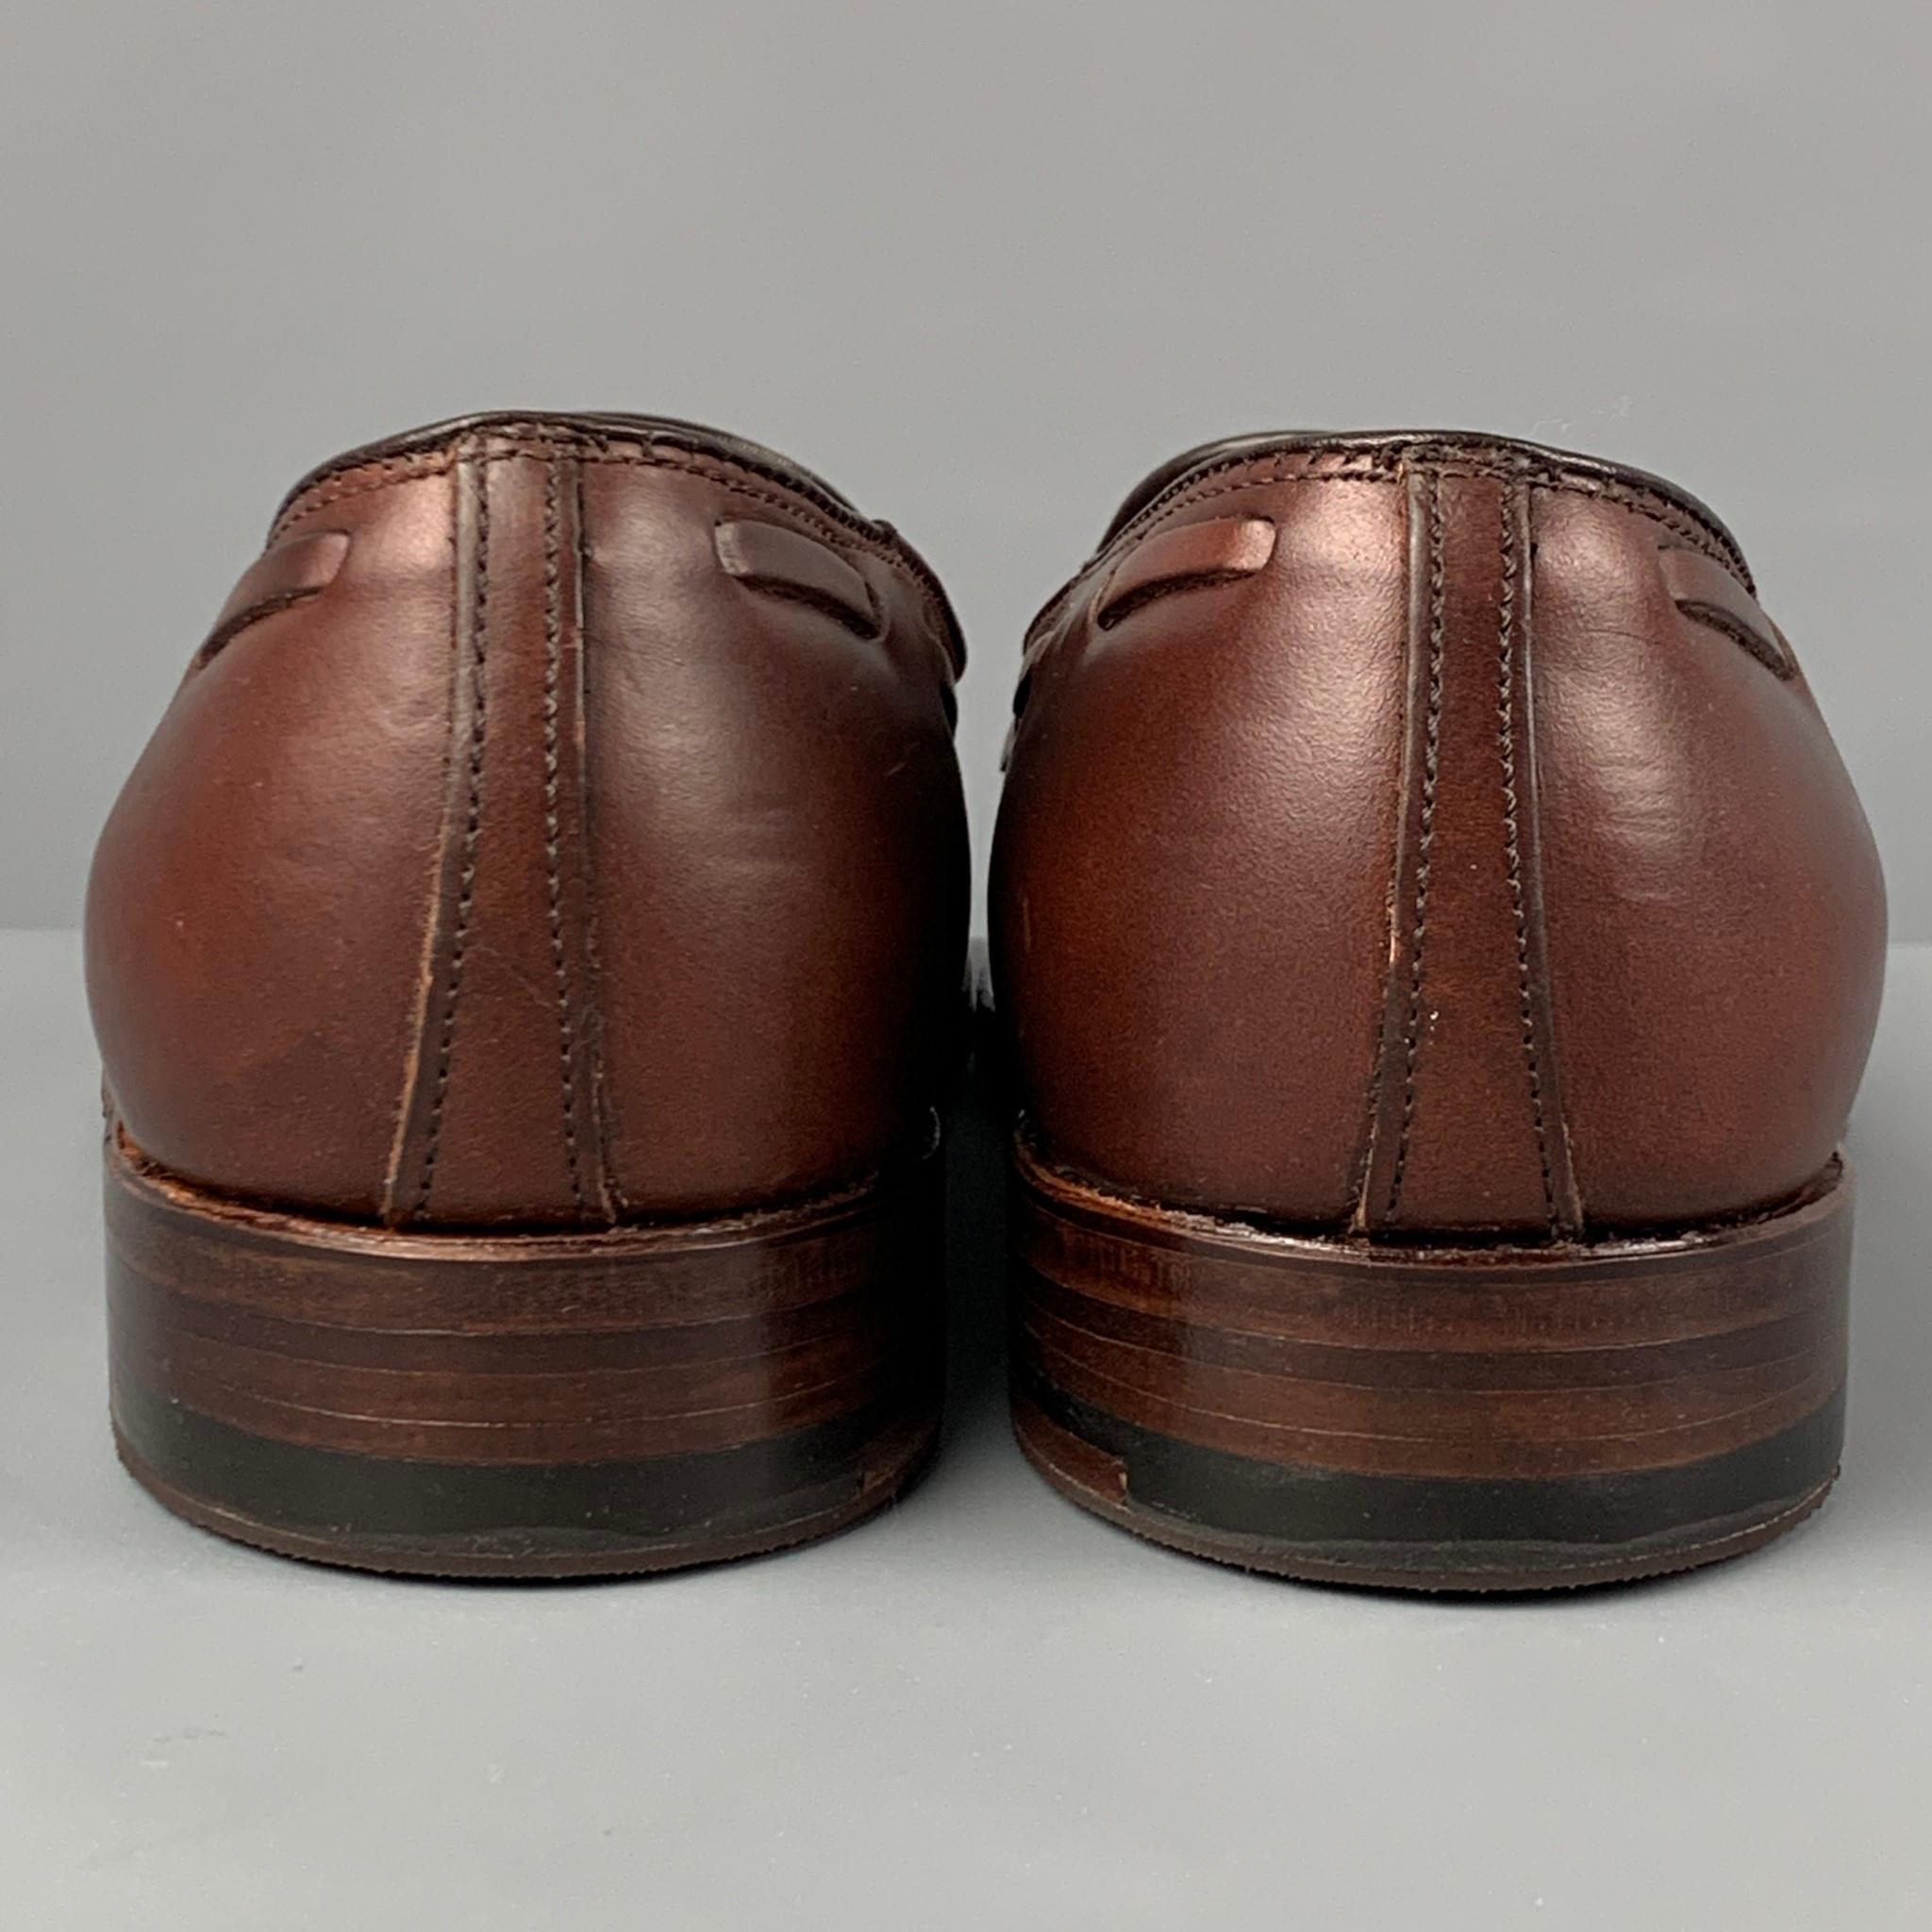 ALDEN Bootmaker Edition Size 7 Brown Leather Tassels Loafers 1